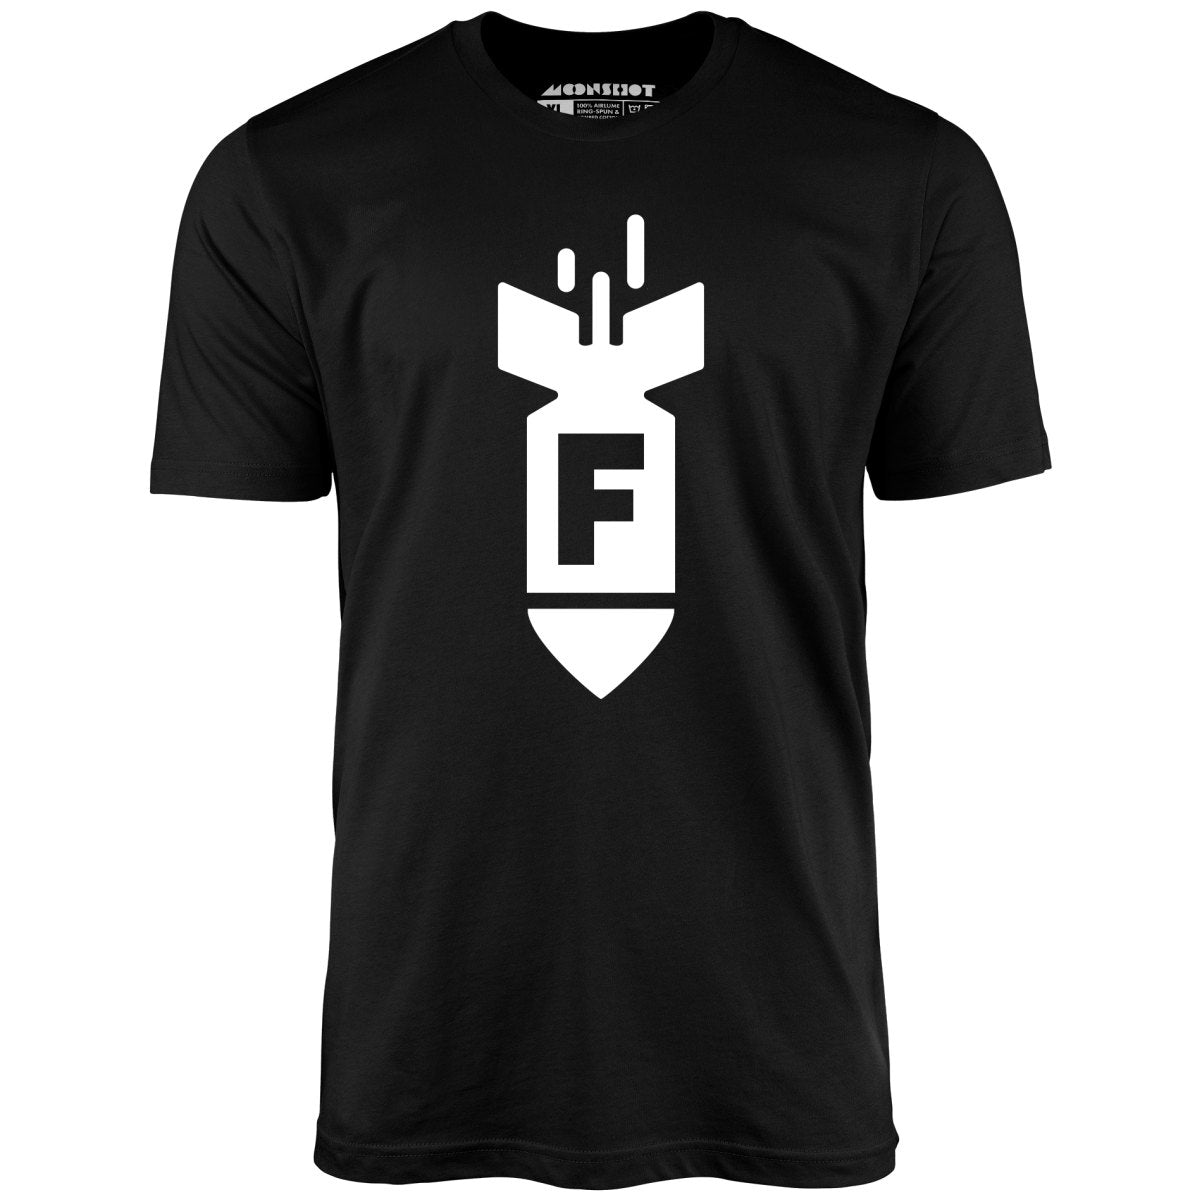 F Bomb - Unisex T-Shirt